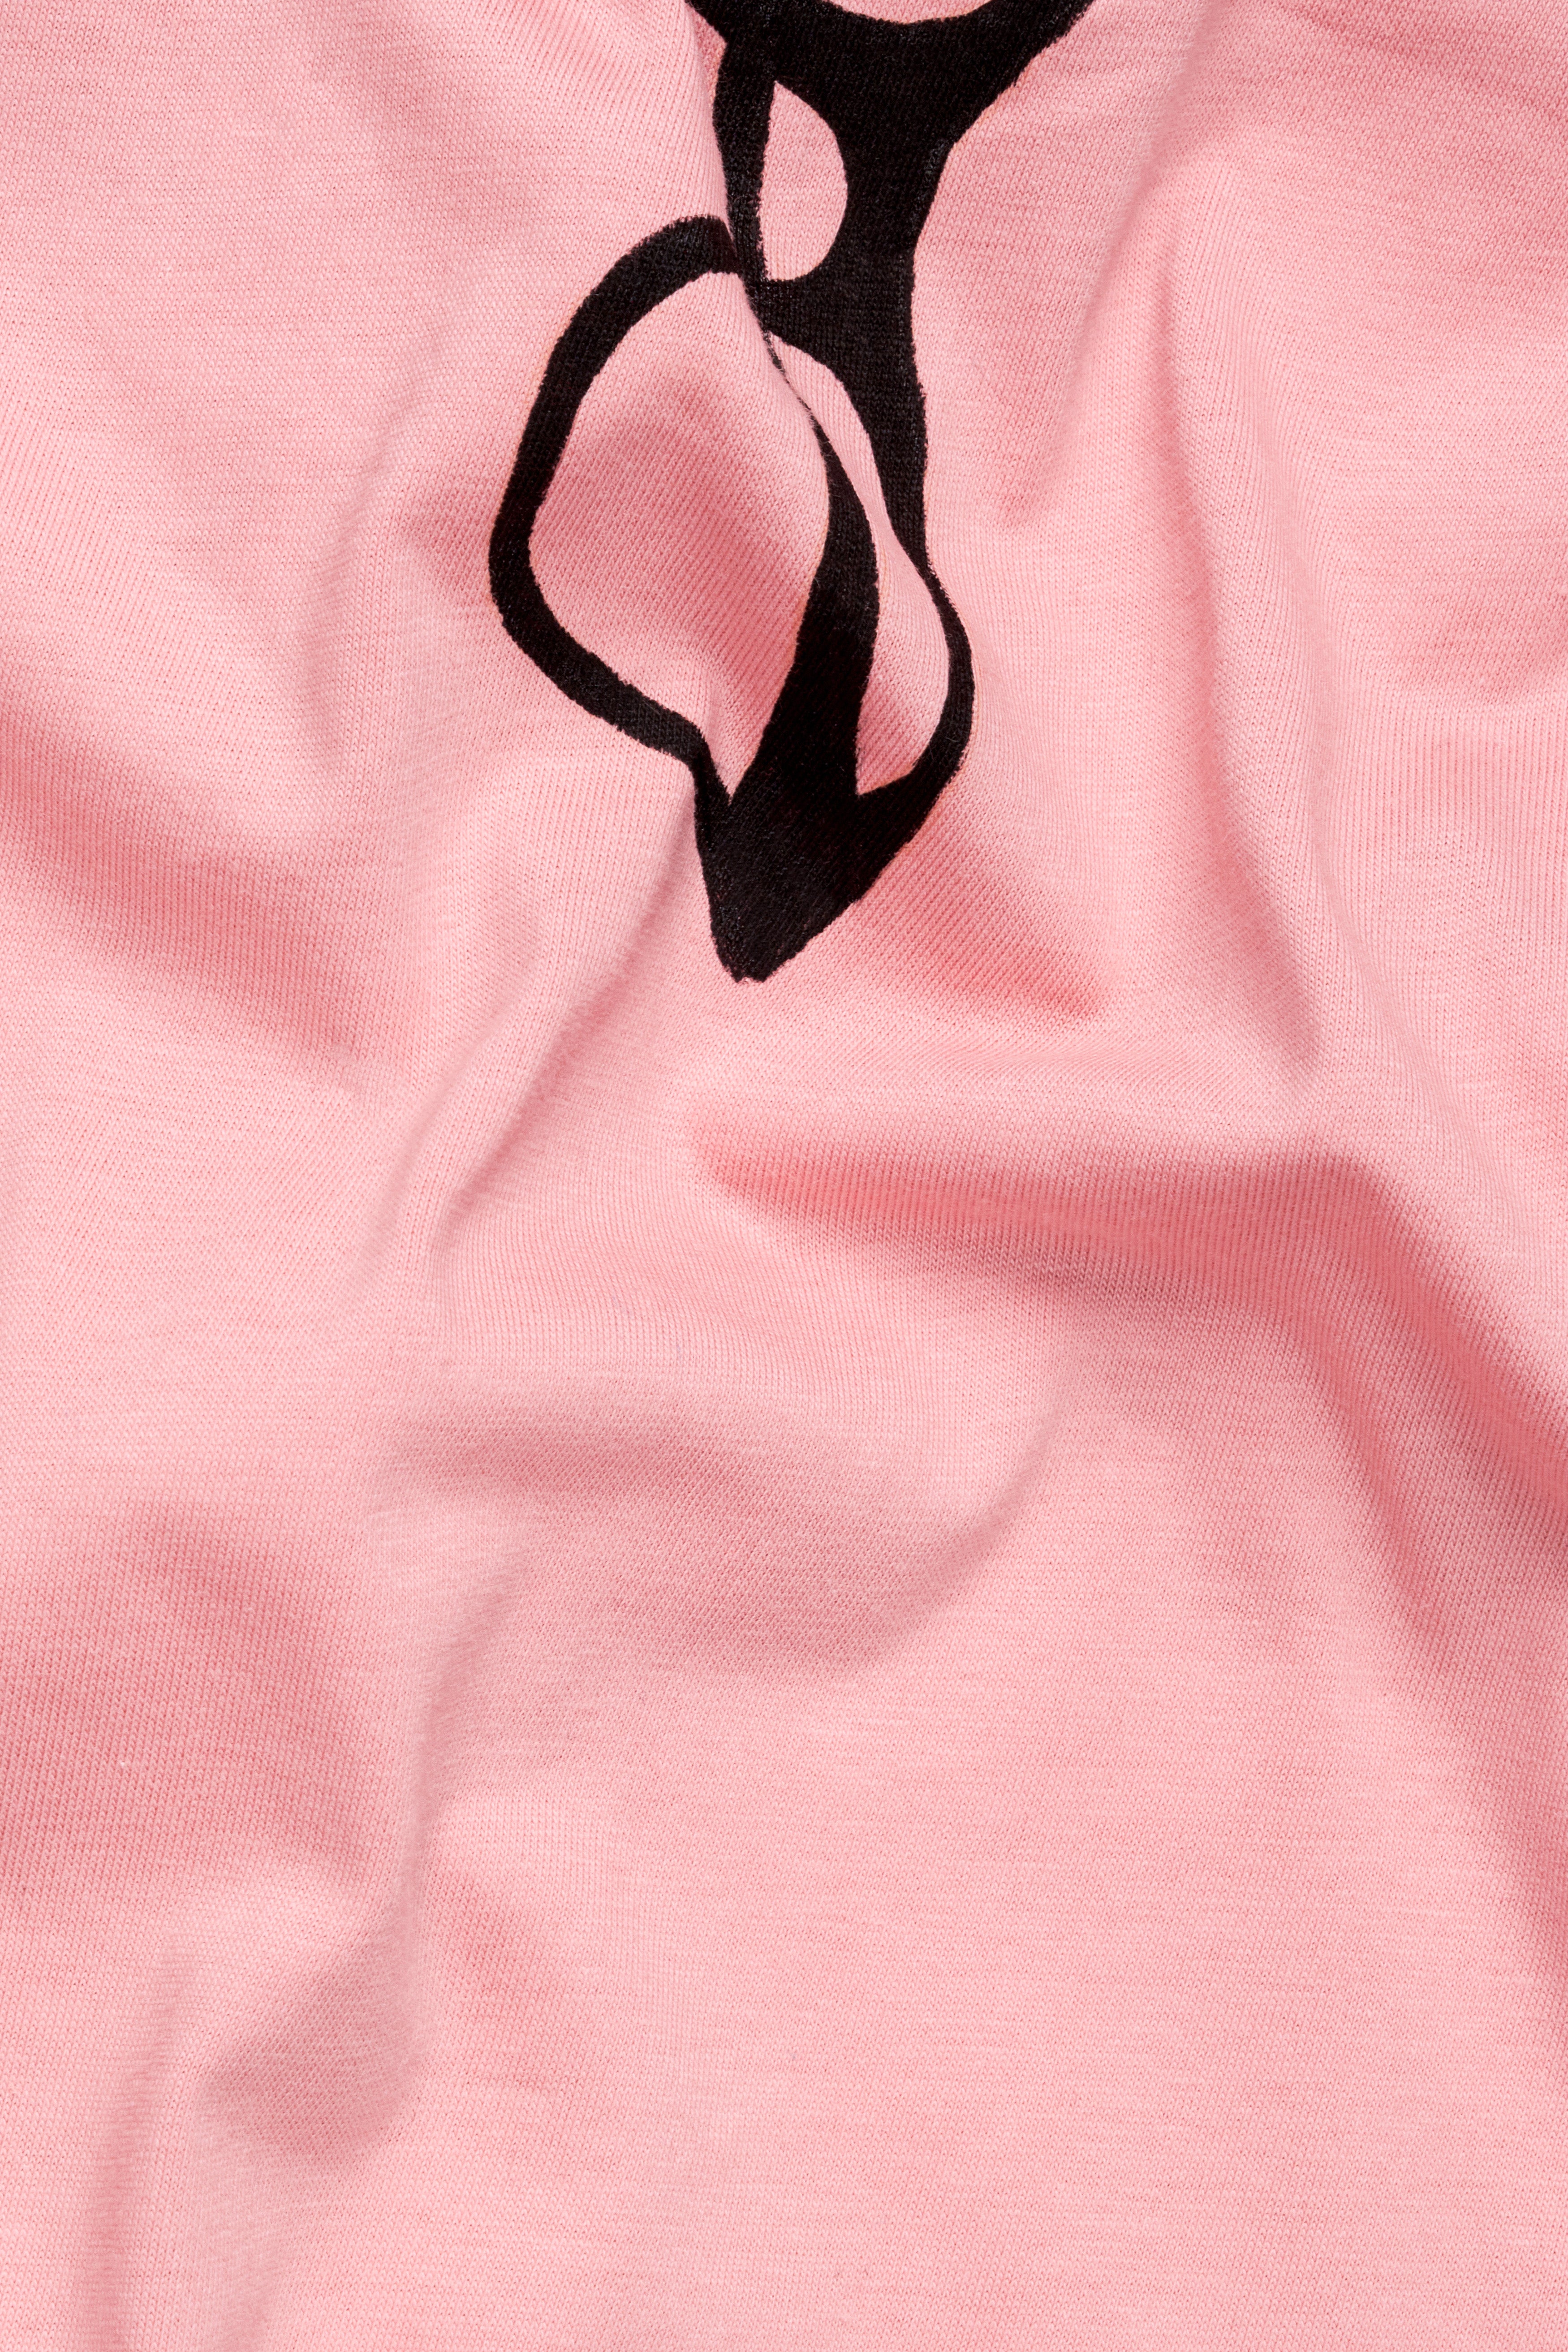 Beauty Bush Pink Funky Hand Painted Organic Cotton T-Shirt TS007-W04-ART-S, TS007-W04-ART-M, TS007-W04-ART-L, TS007-W04-ART-XL, TS007-W04-ART-XXL